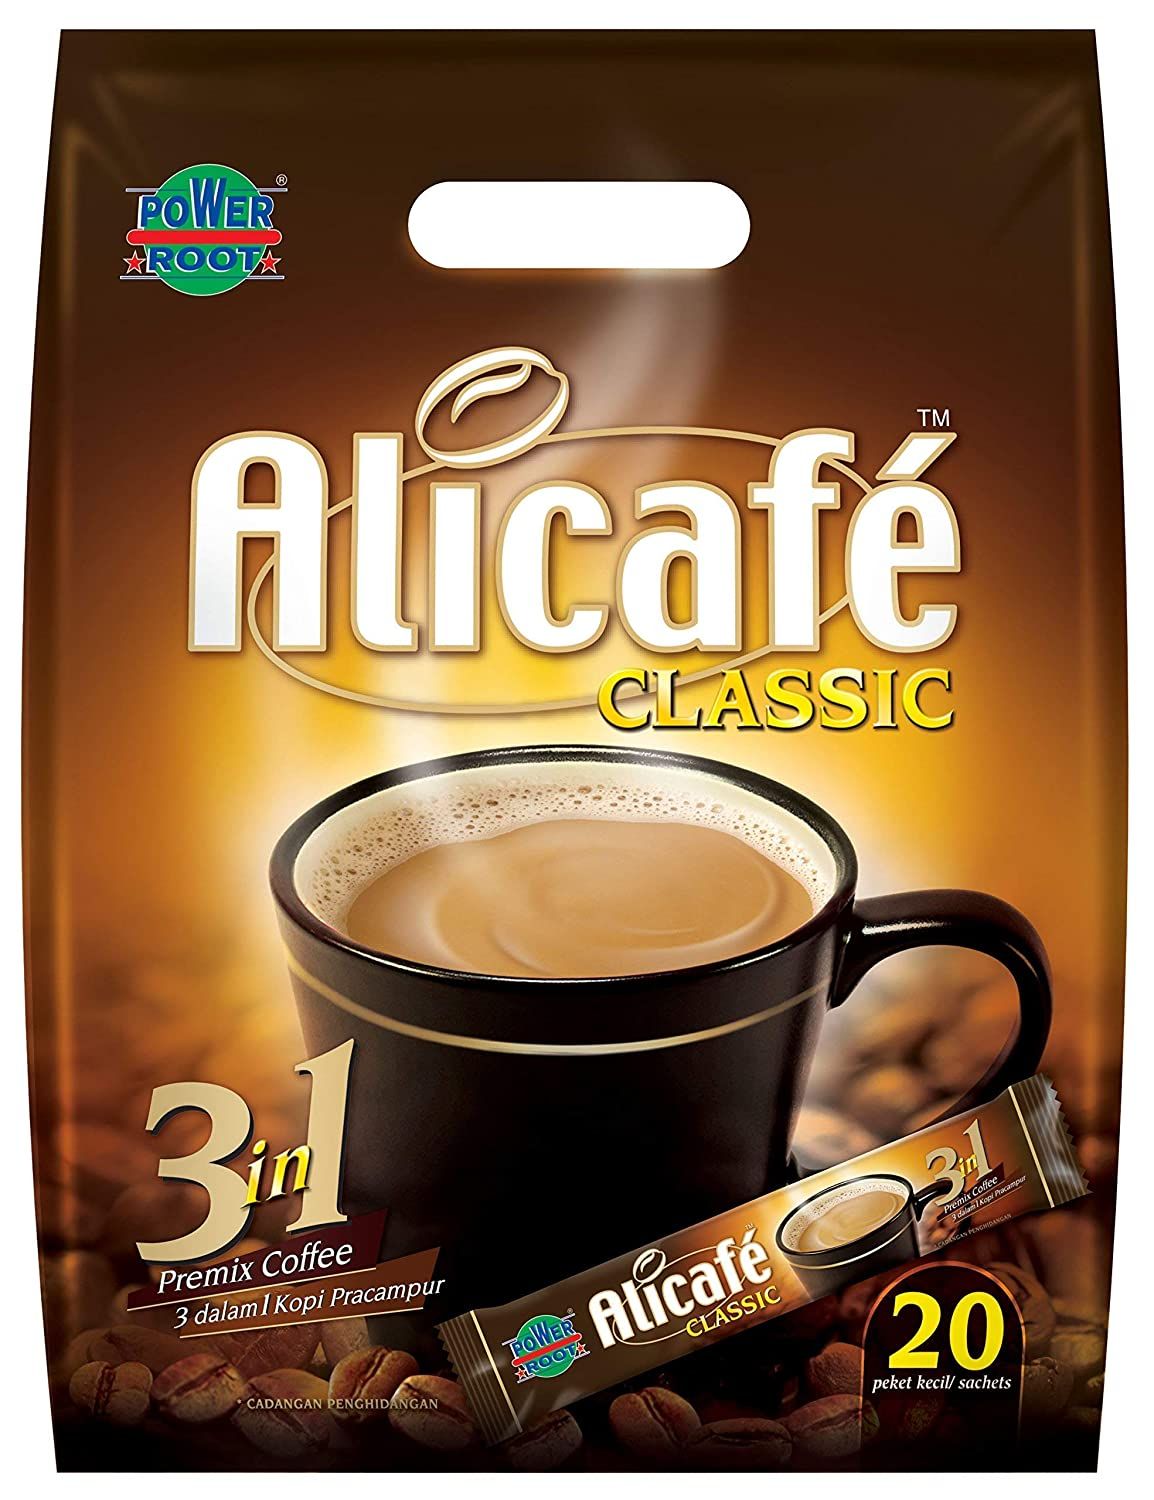 Alicafe Classic Coffee Image